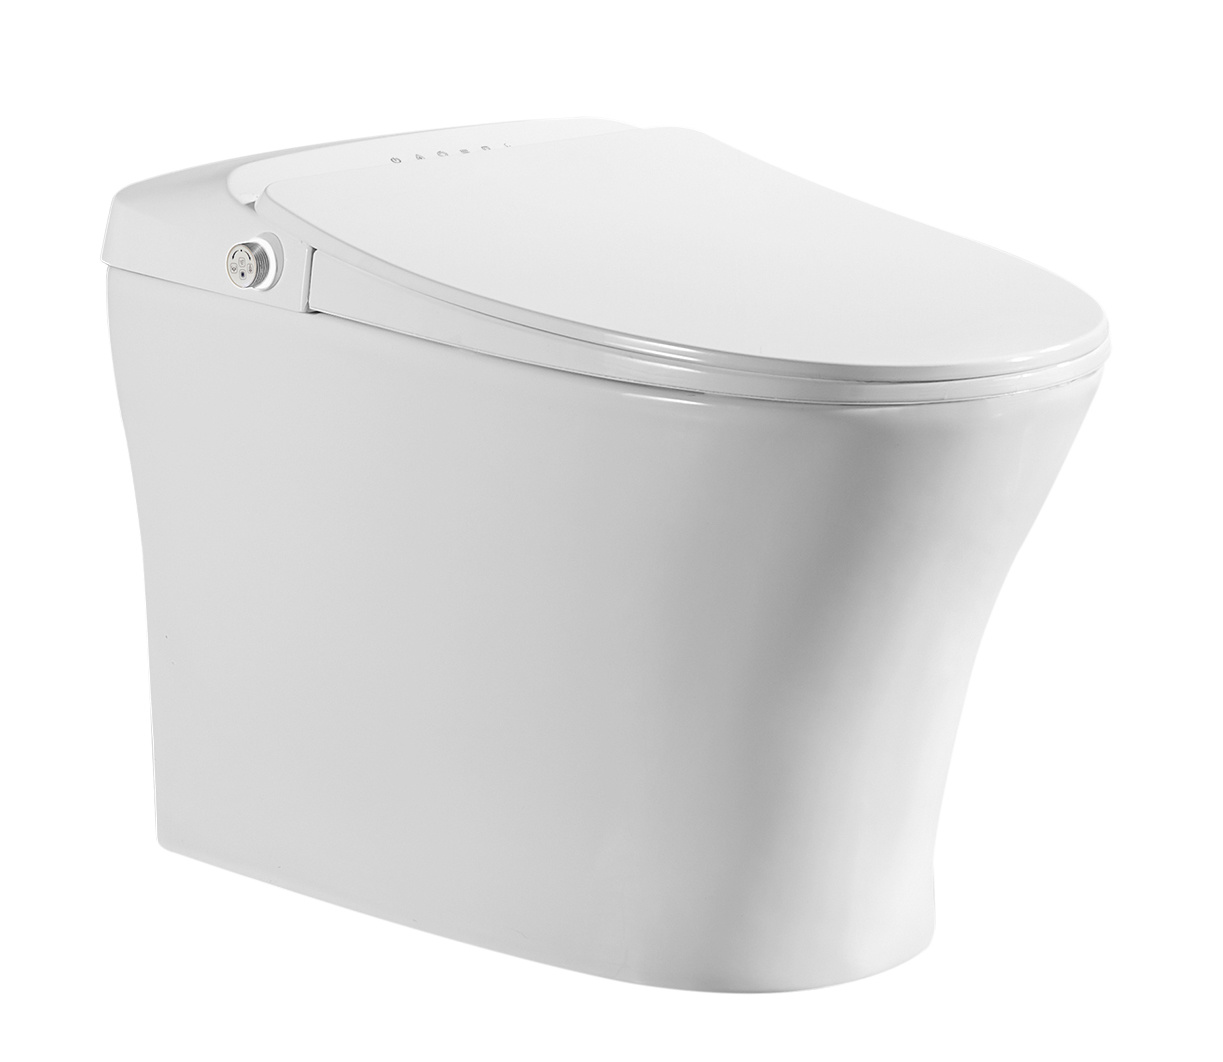 Intelligent smart toilet H-5004